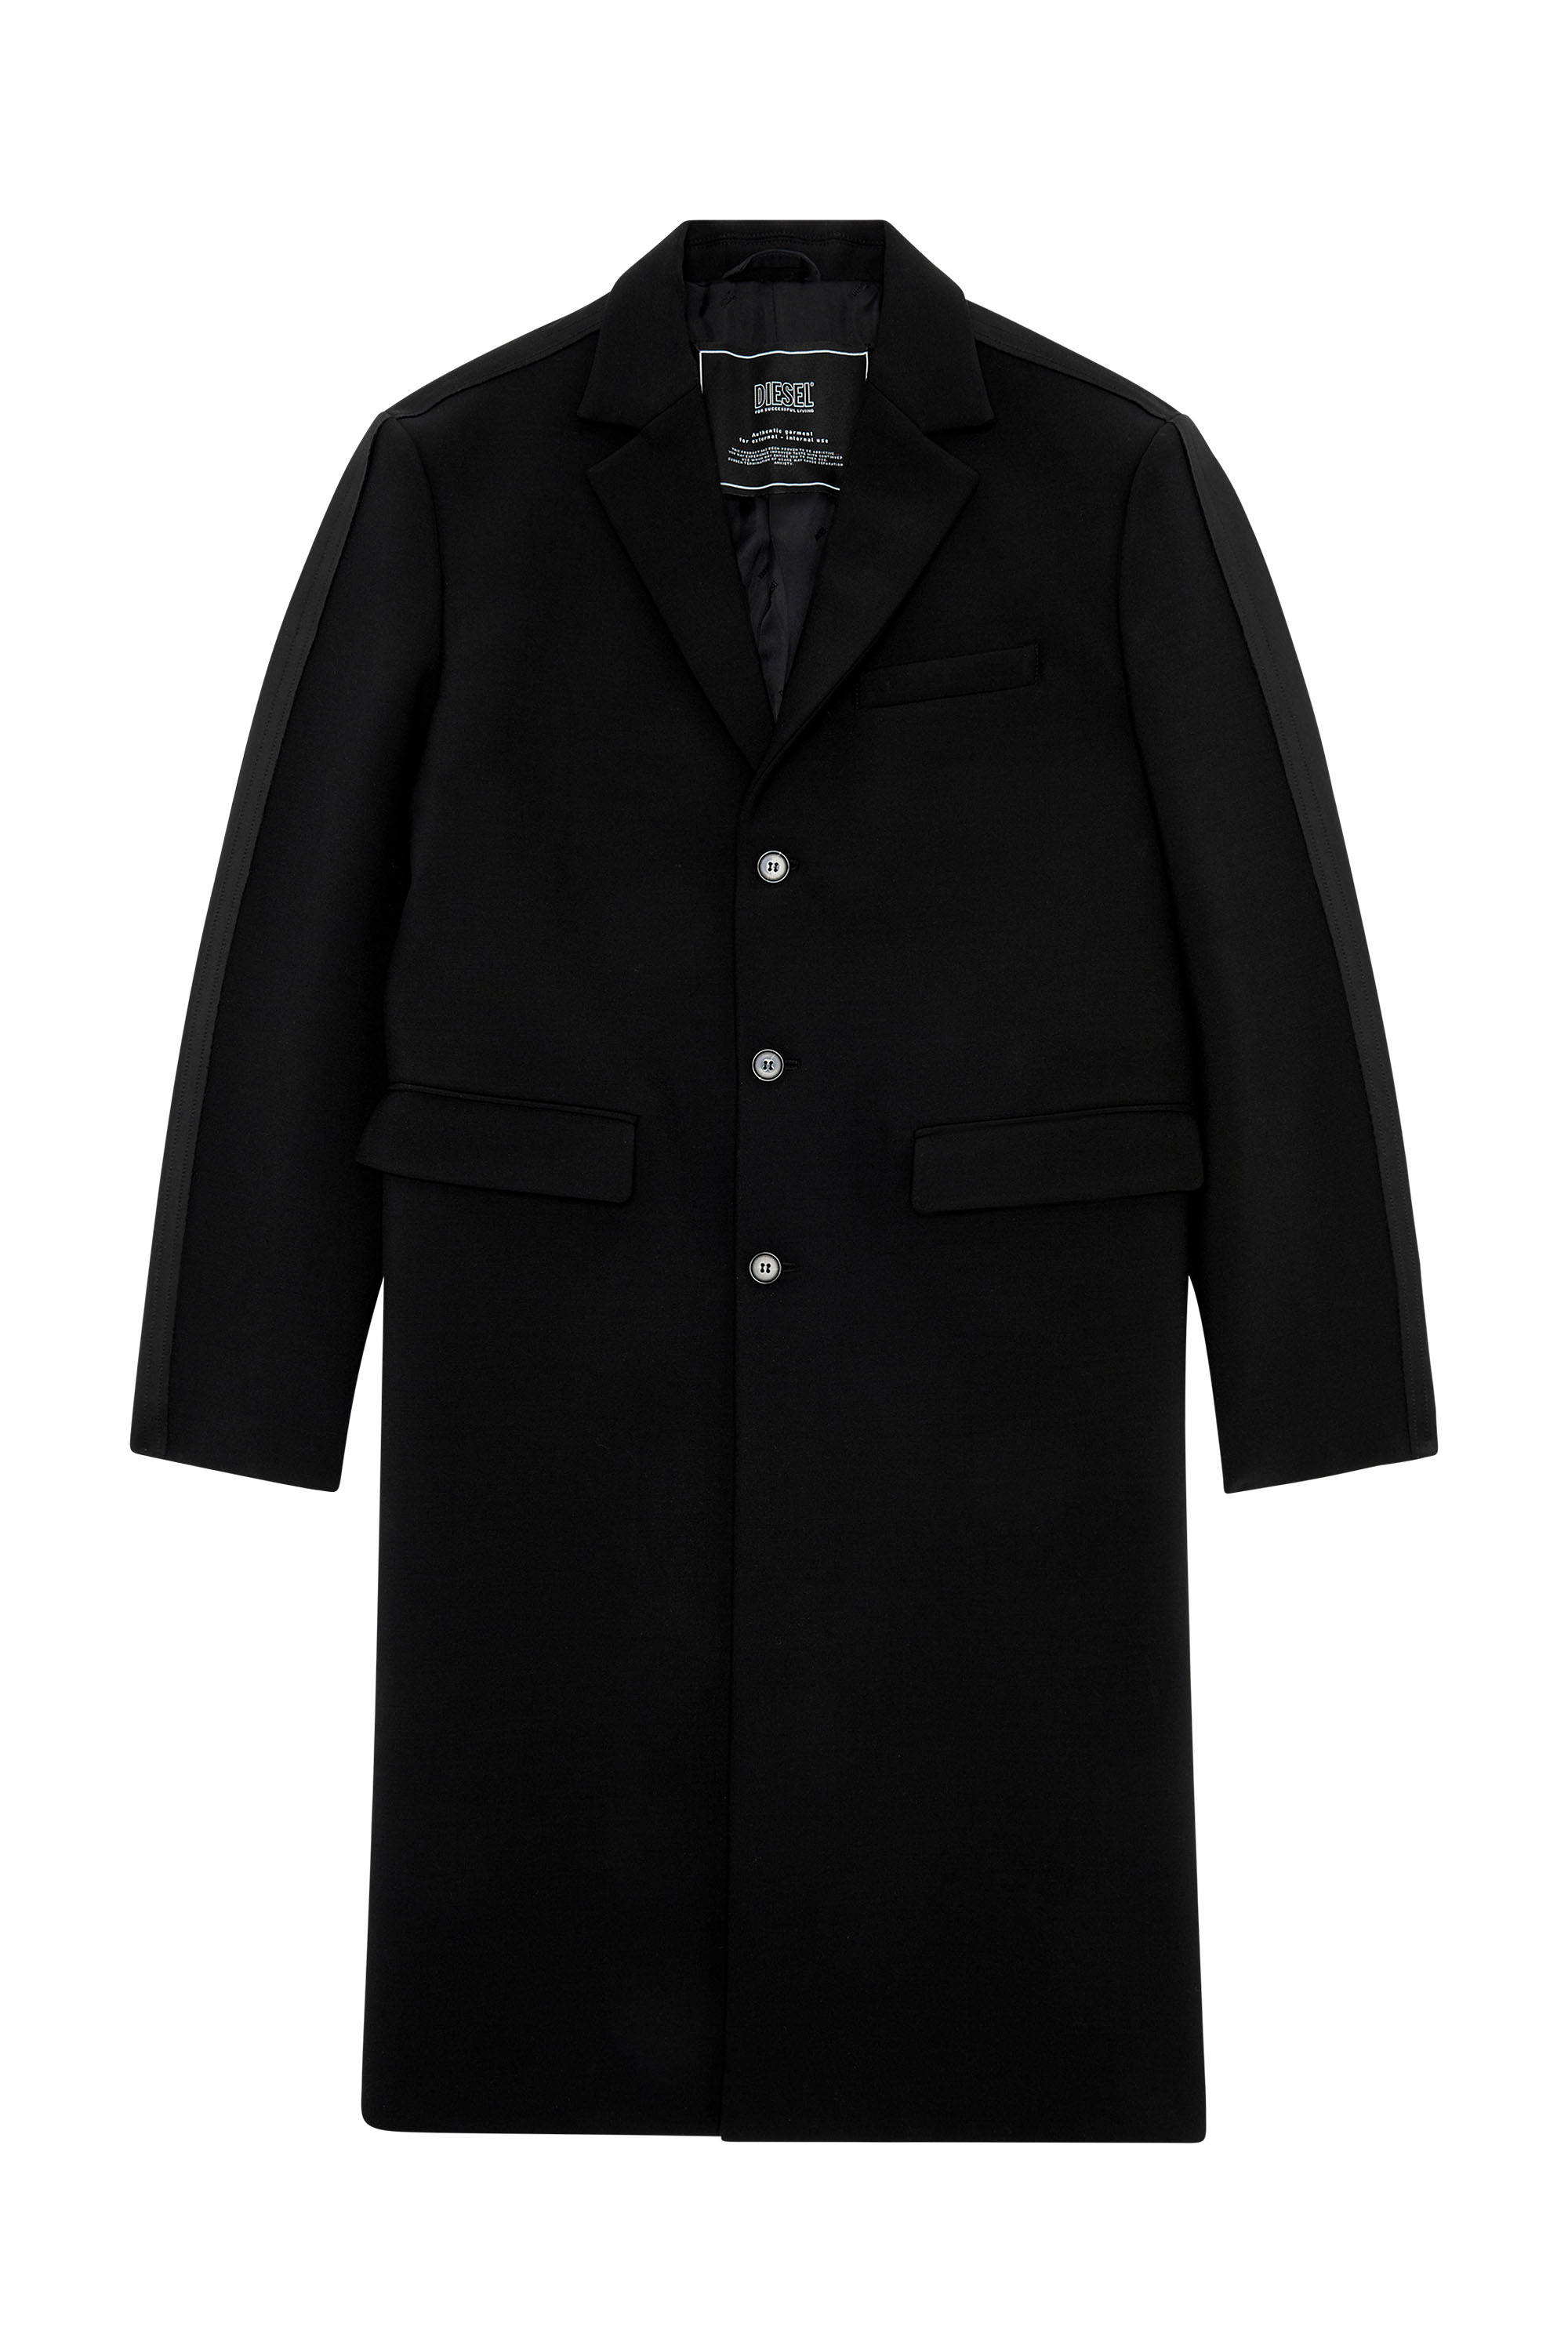 Diesel - J-DELLER, Man Hybrid coat in cool wool and jersey in Black - Image 3